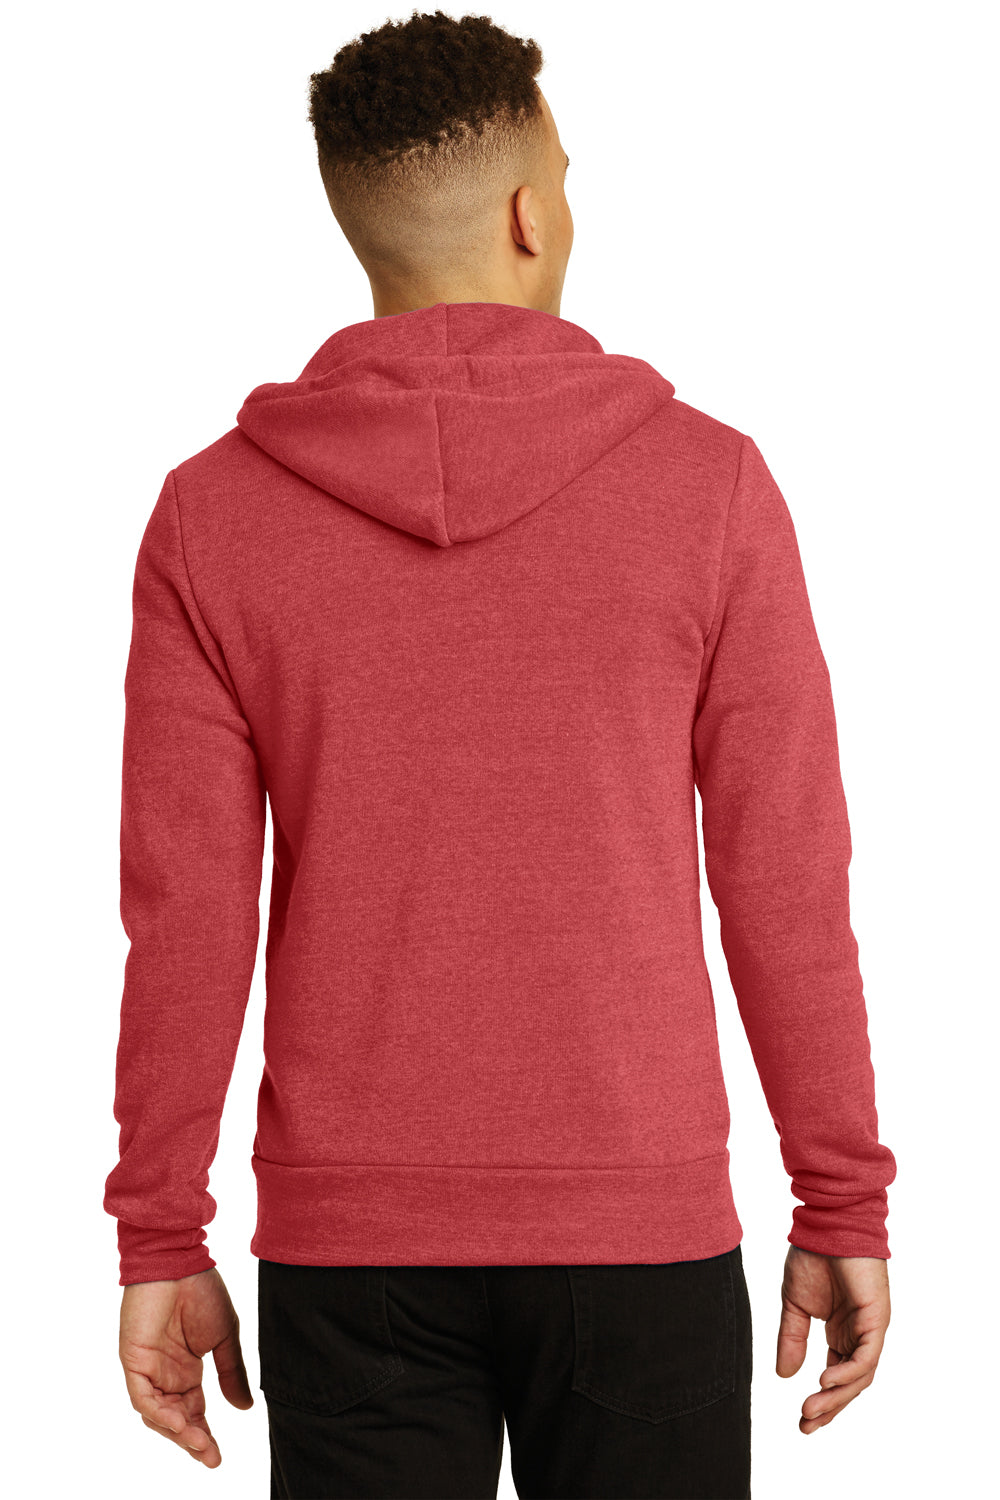 Alternative AA9590/9590 Mens Rocky Eco Fleece Full Zip Hooded Sweatshirt Hoodie Eco True Red Model Back